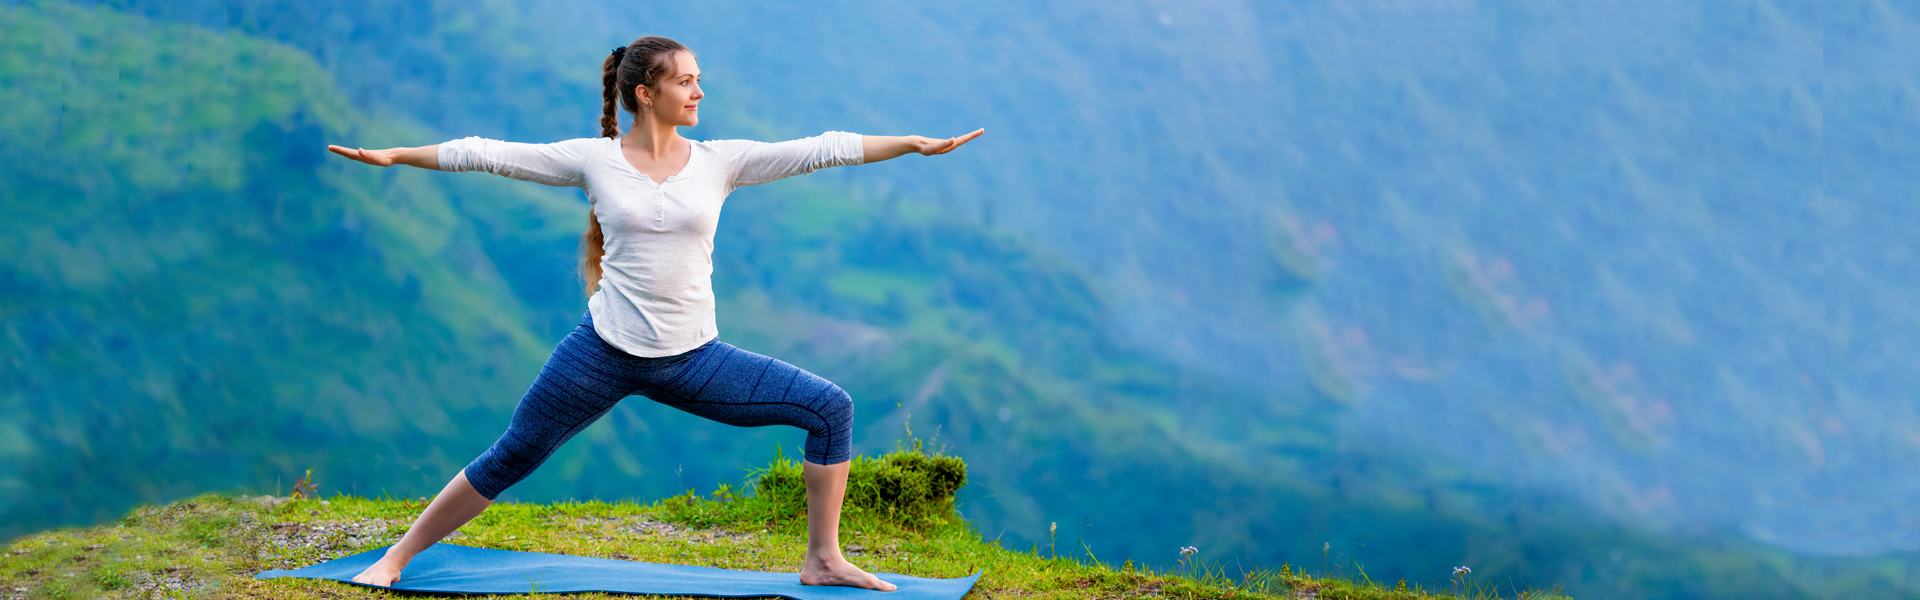 Humble Warrior (Baddha Virabhadrasana) – Yoga Poses Guide by WorkoutLabs